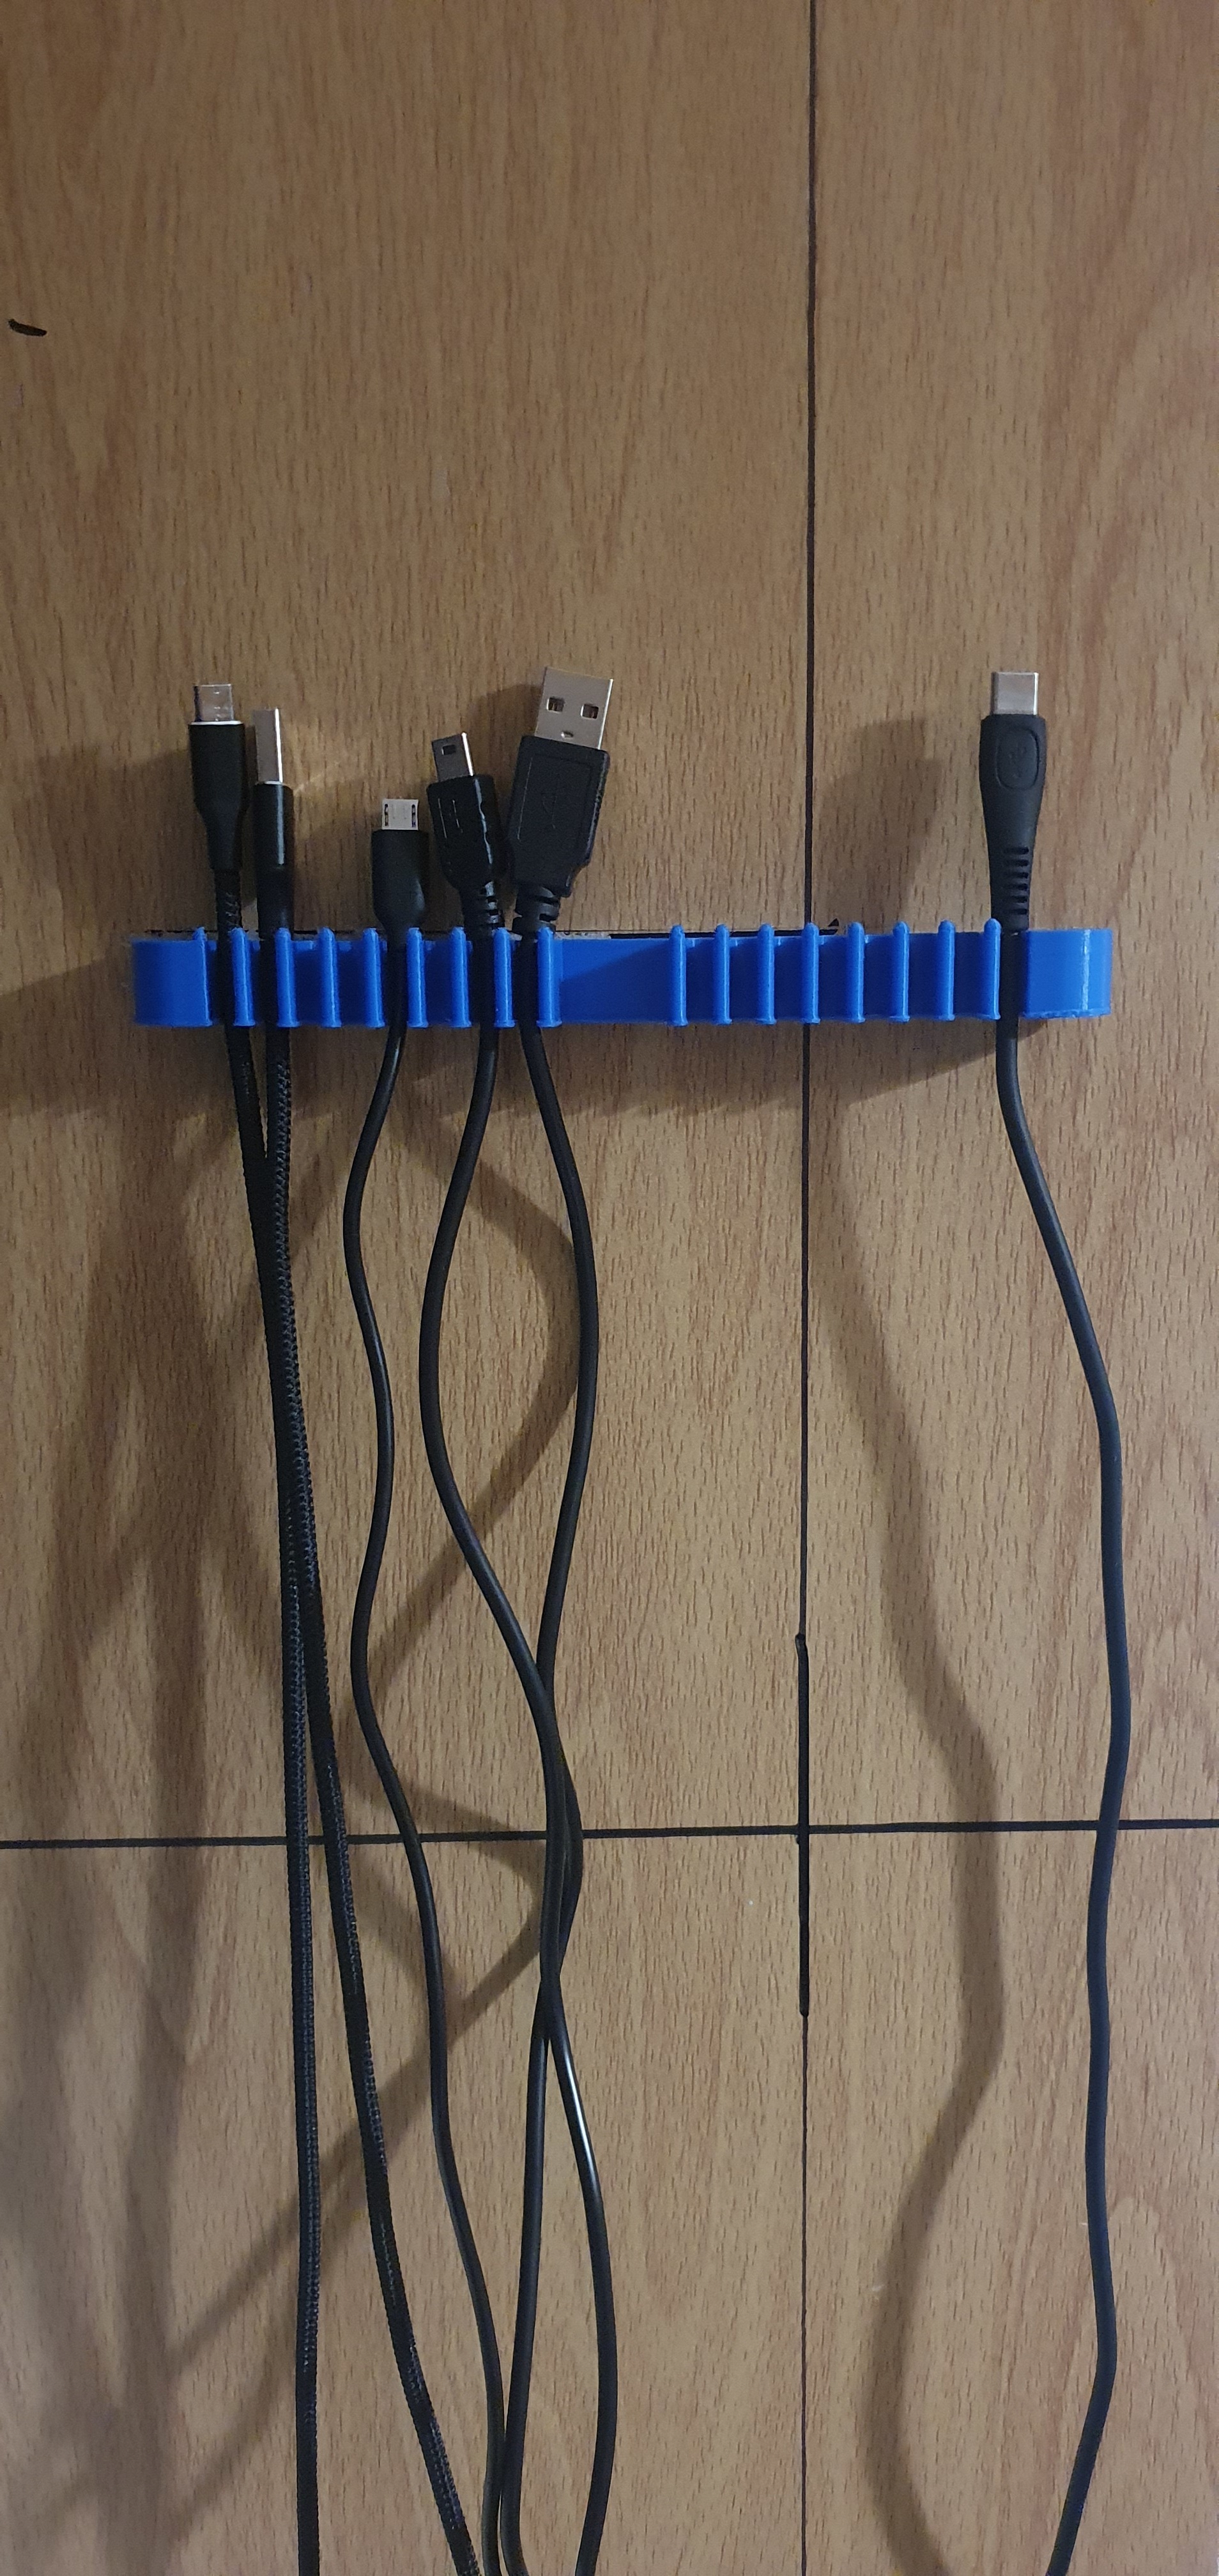 3D Printed USB Cable organiser (Improved) by Karol.J95